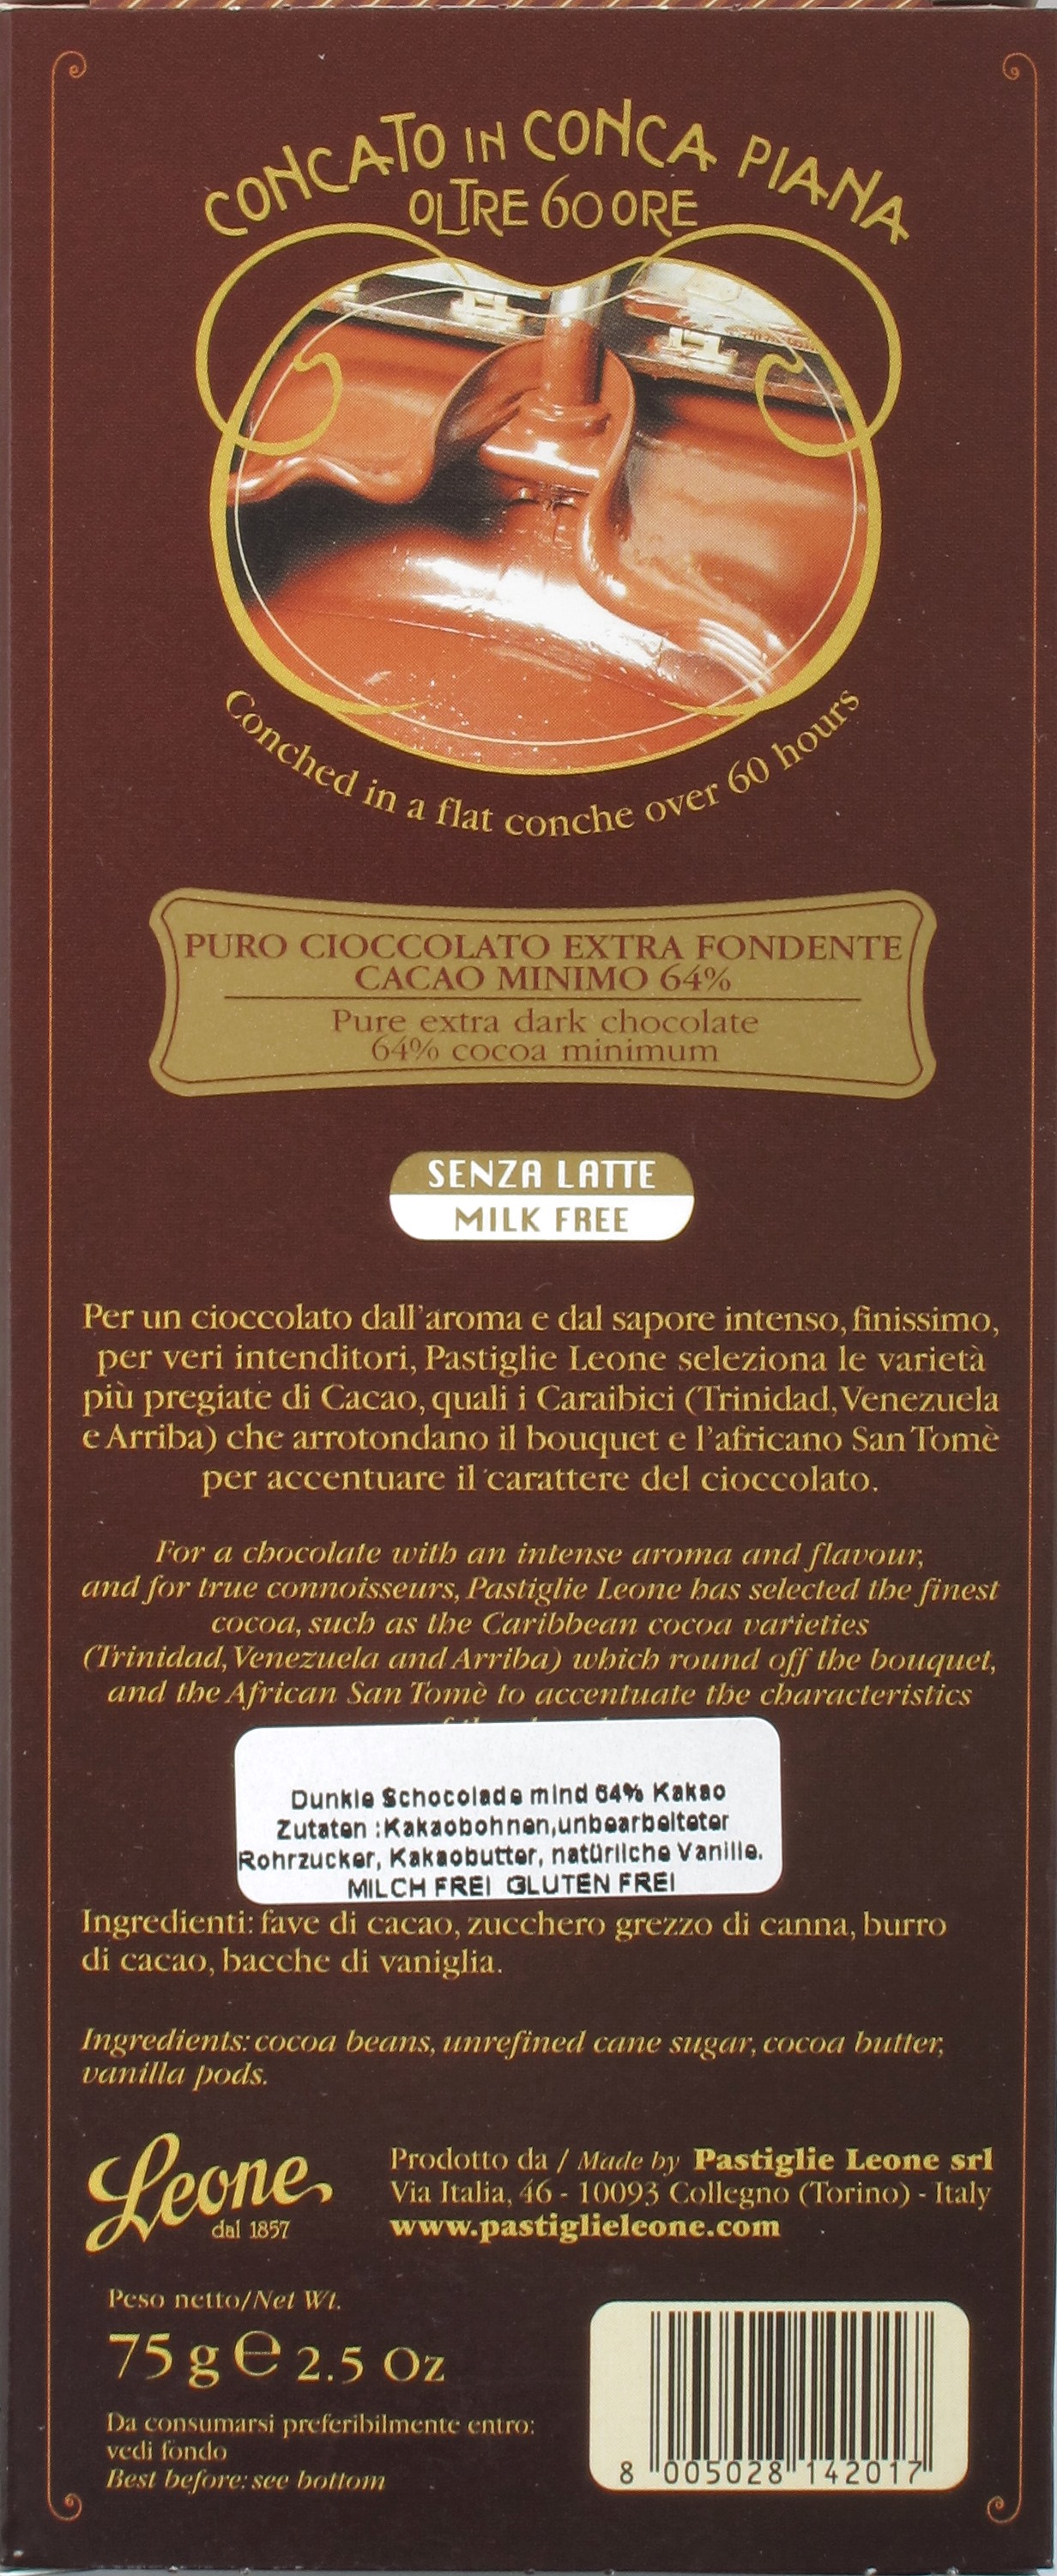 Pastiglie Leone Bitterschokolade 64%, Rückseite